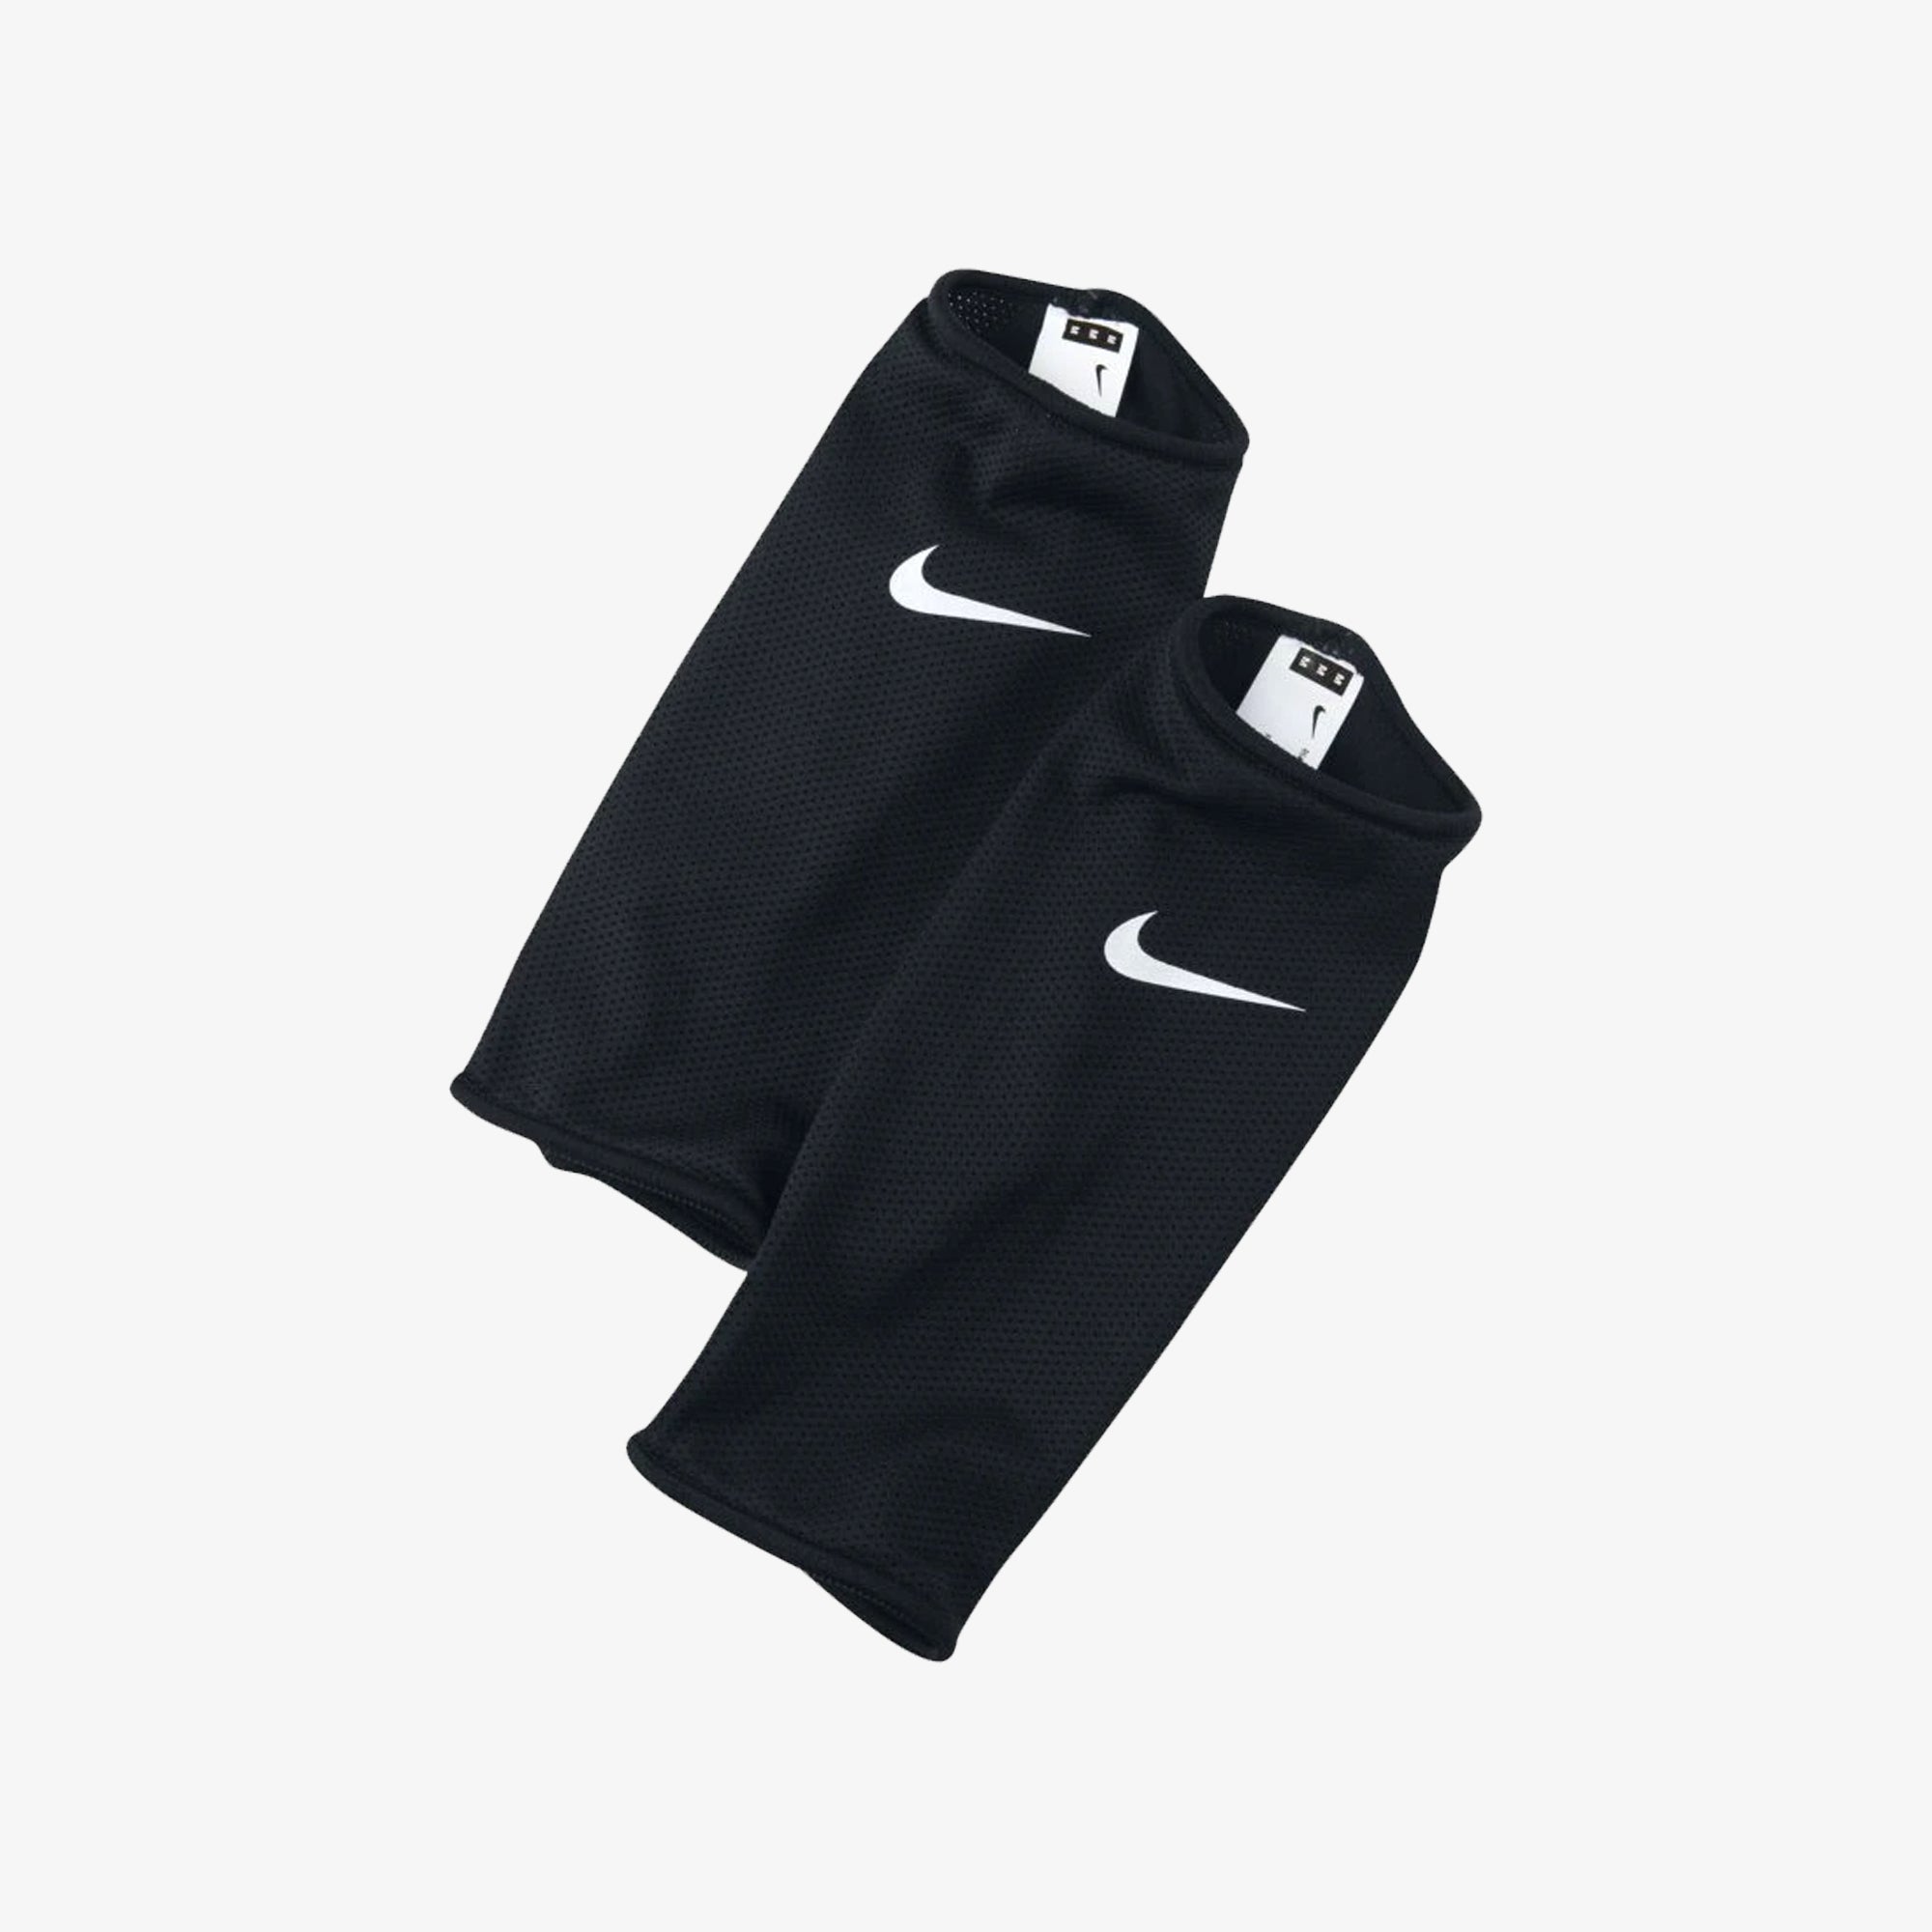 Enten menigte jogger Nike Guard Lock Soccer Shinguard Sleeve - Black